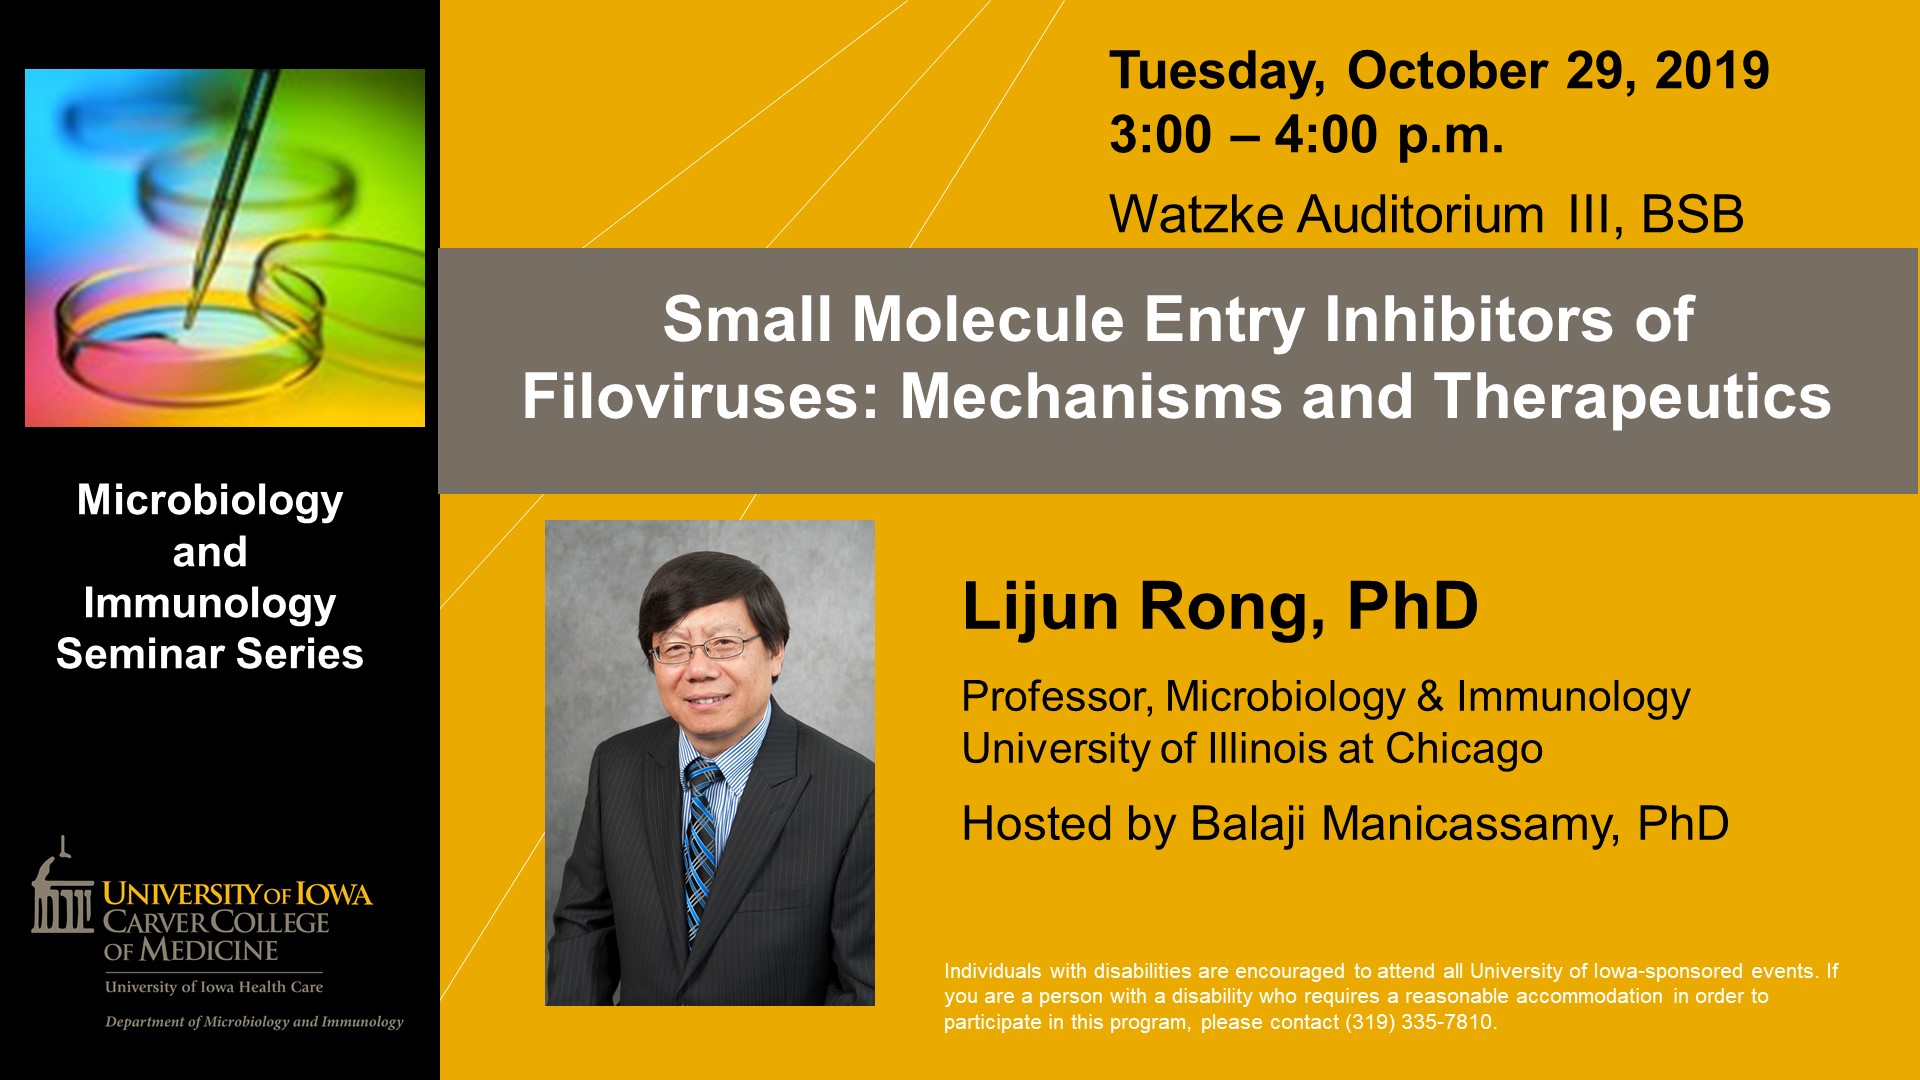 Microbiology and Immunology Seminar: Dr. Lijun Rong, PhD promotional image